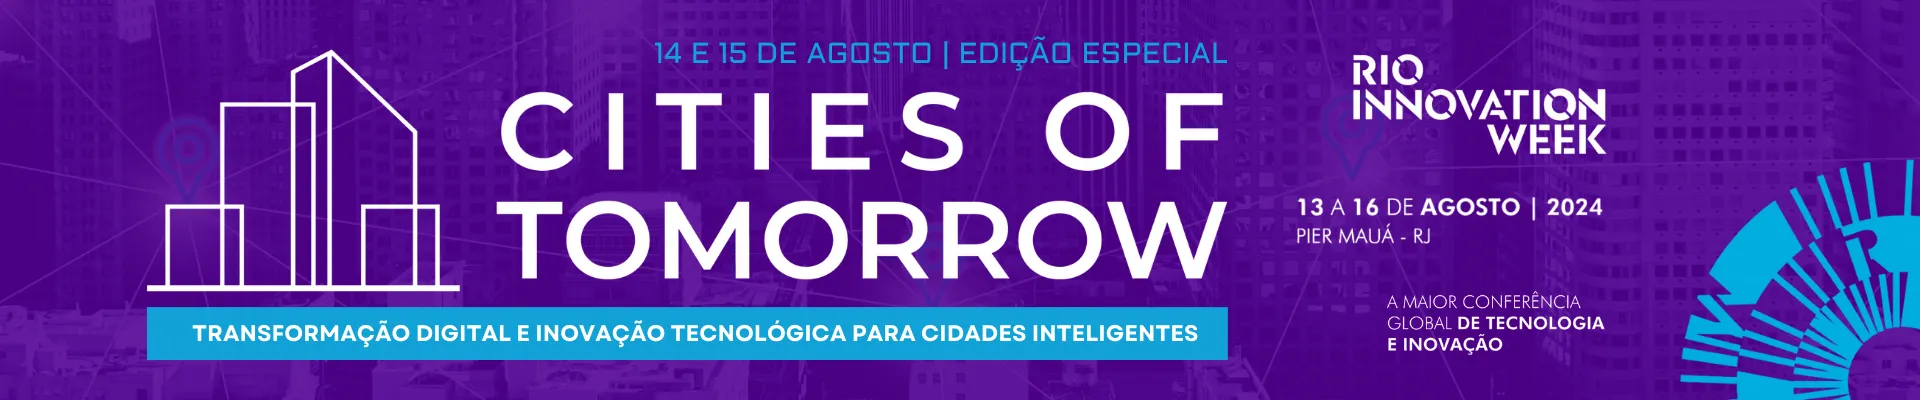 Cities of Tomorrow no Rio Innovation Week 2024